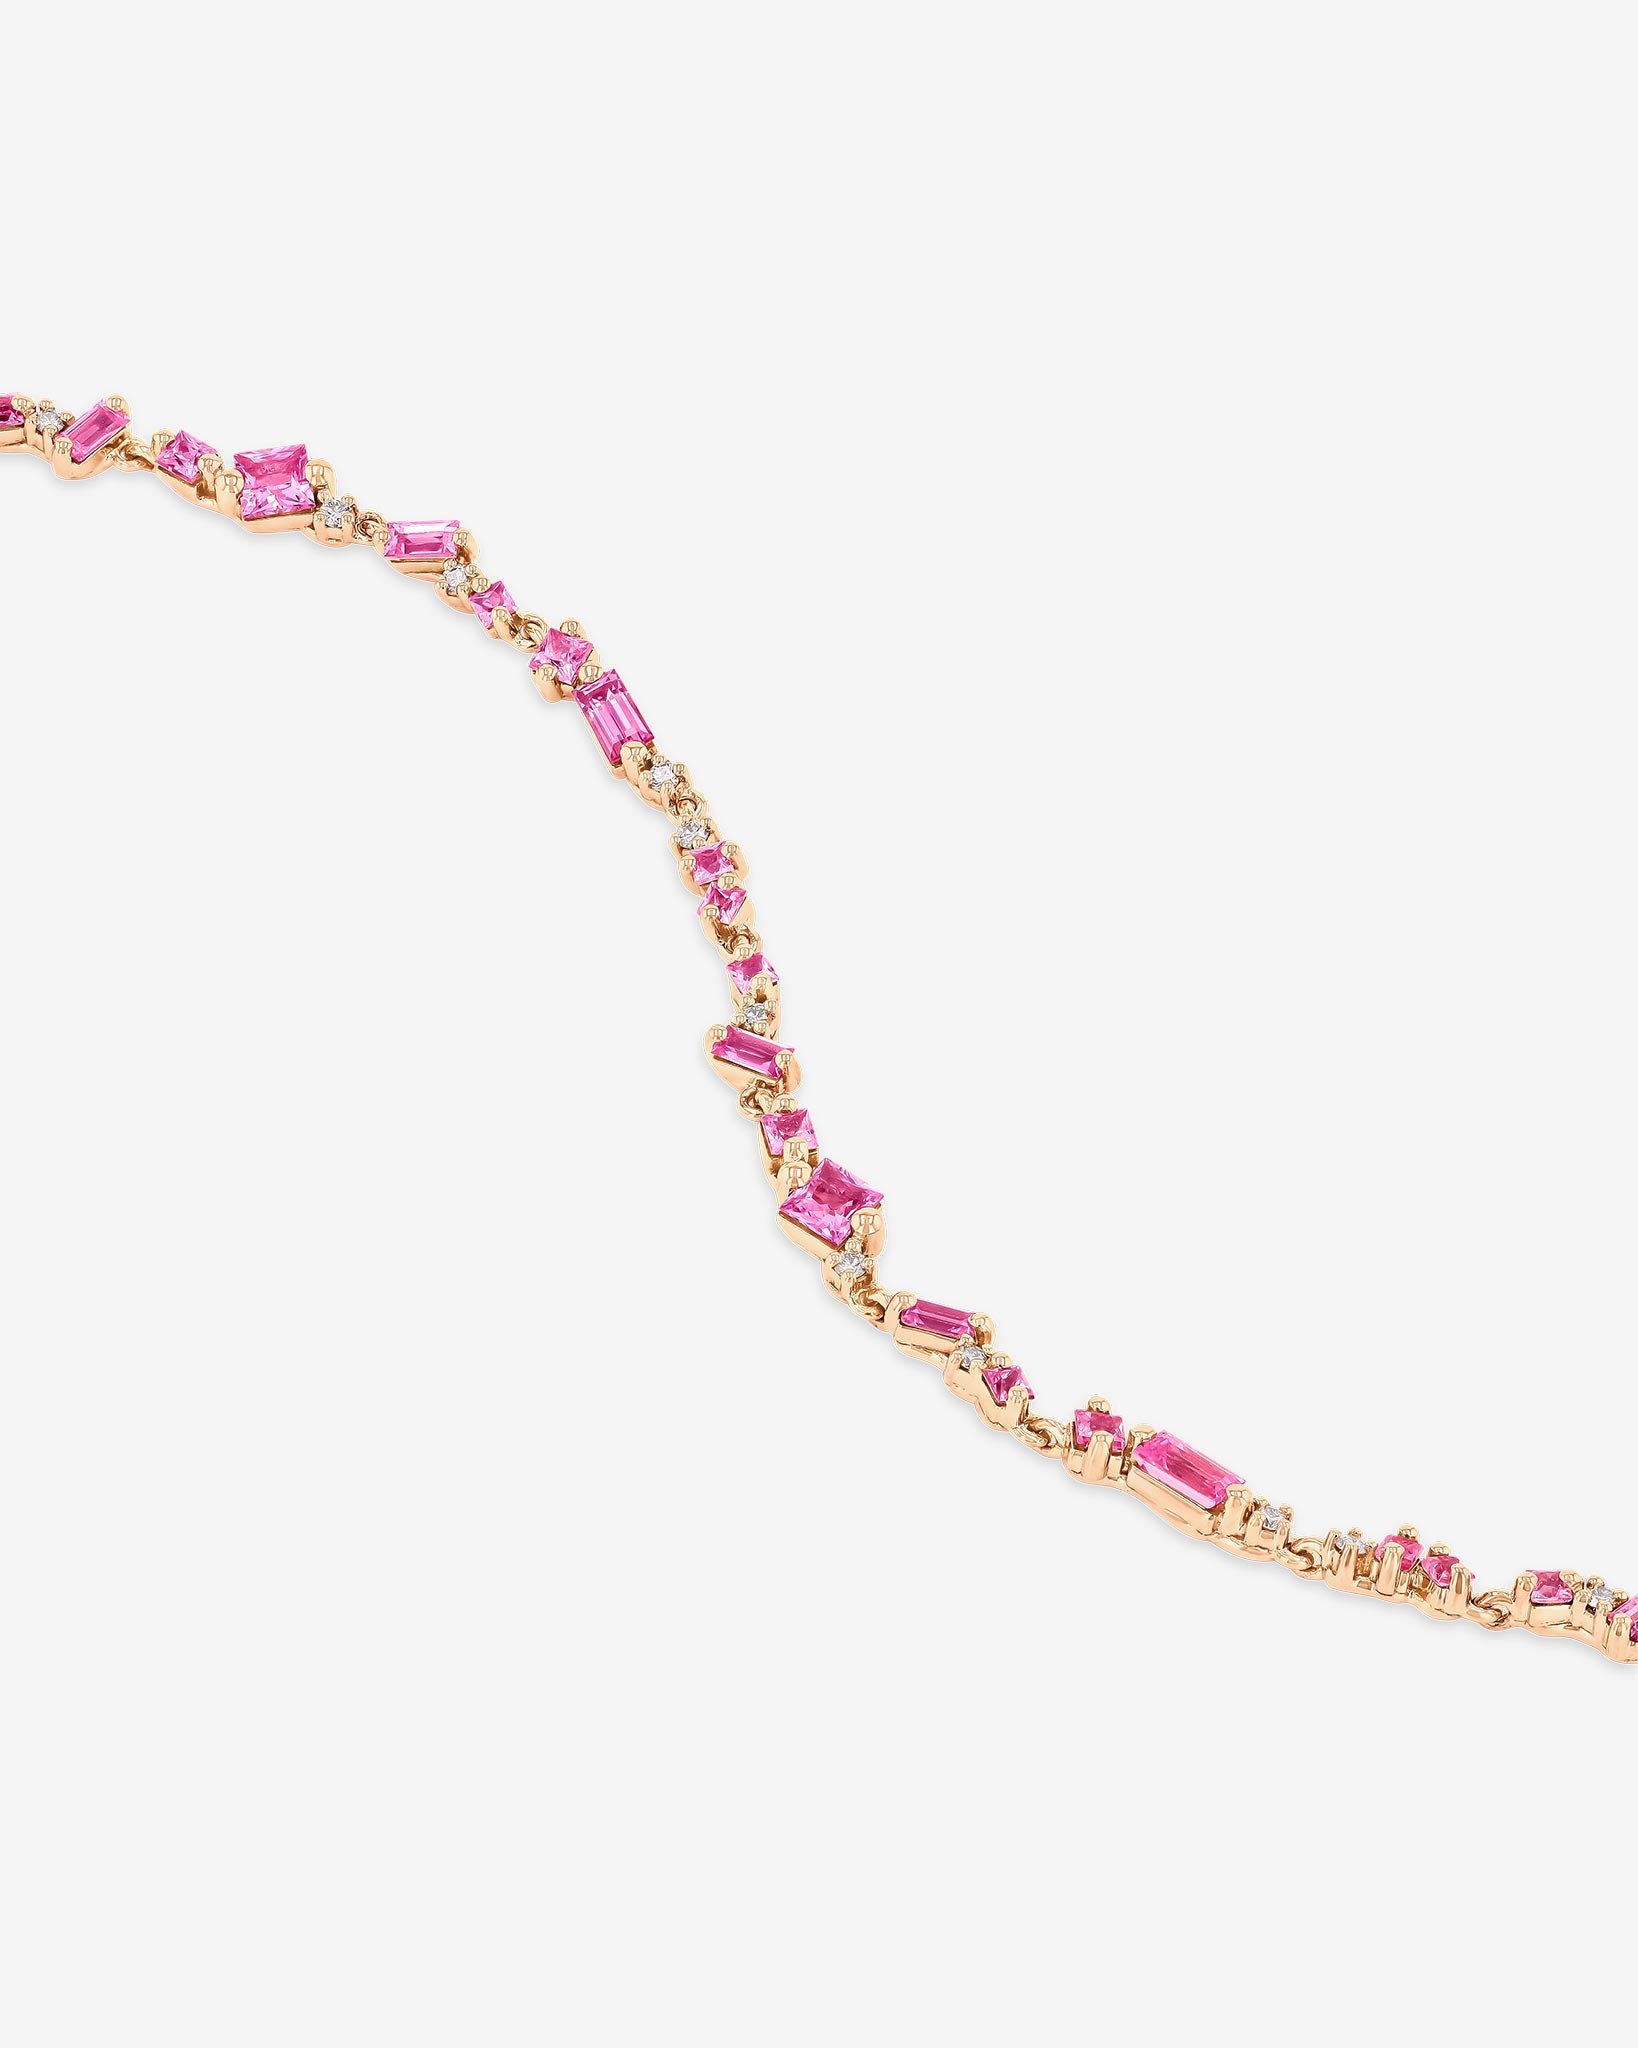 Suzanne Kalan La Fantaisie Star Dust Pink Sapphire Bracelet in 18k rose gold